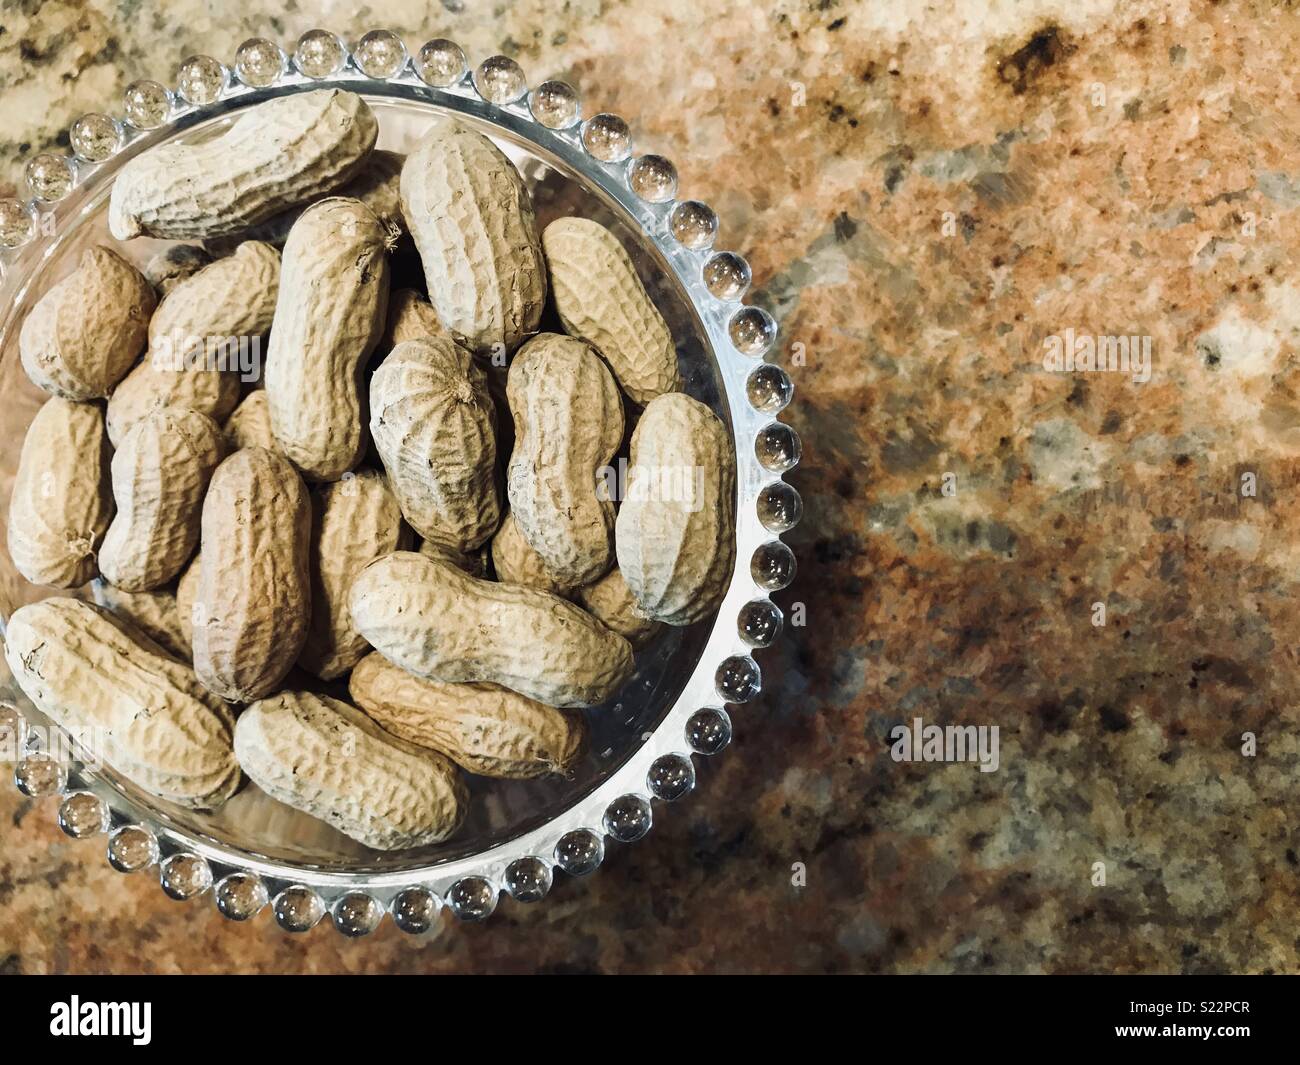 Bowl of peanuts Stock Photo